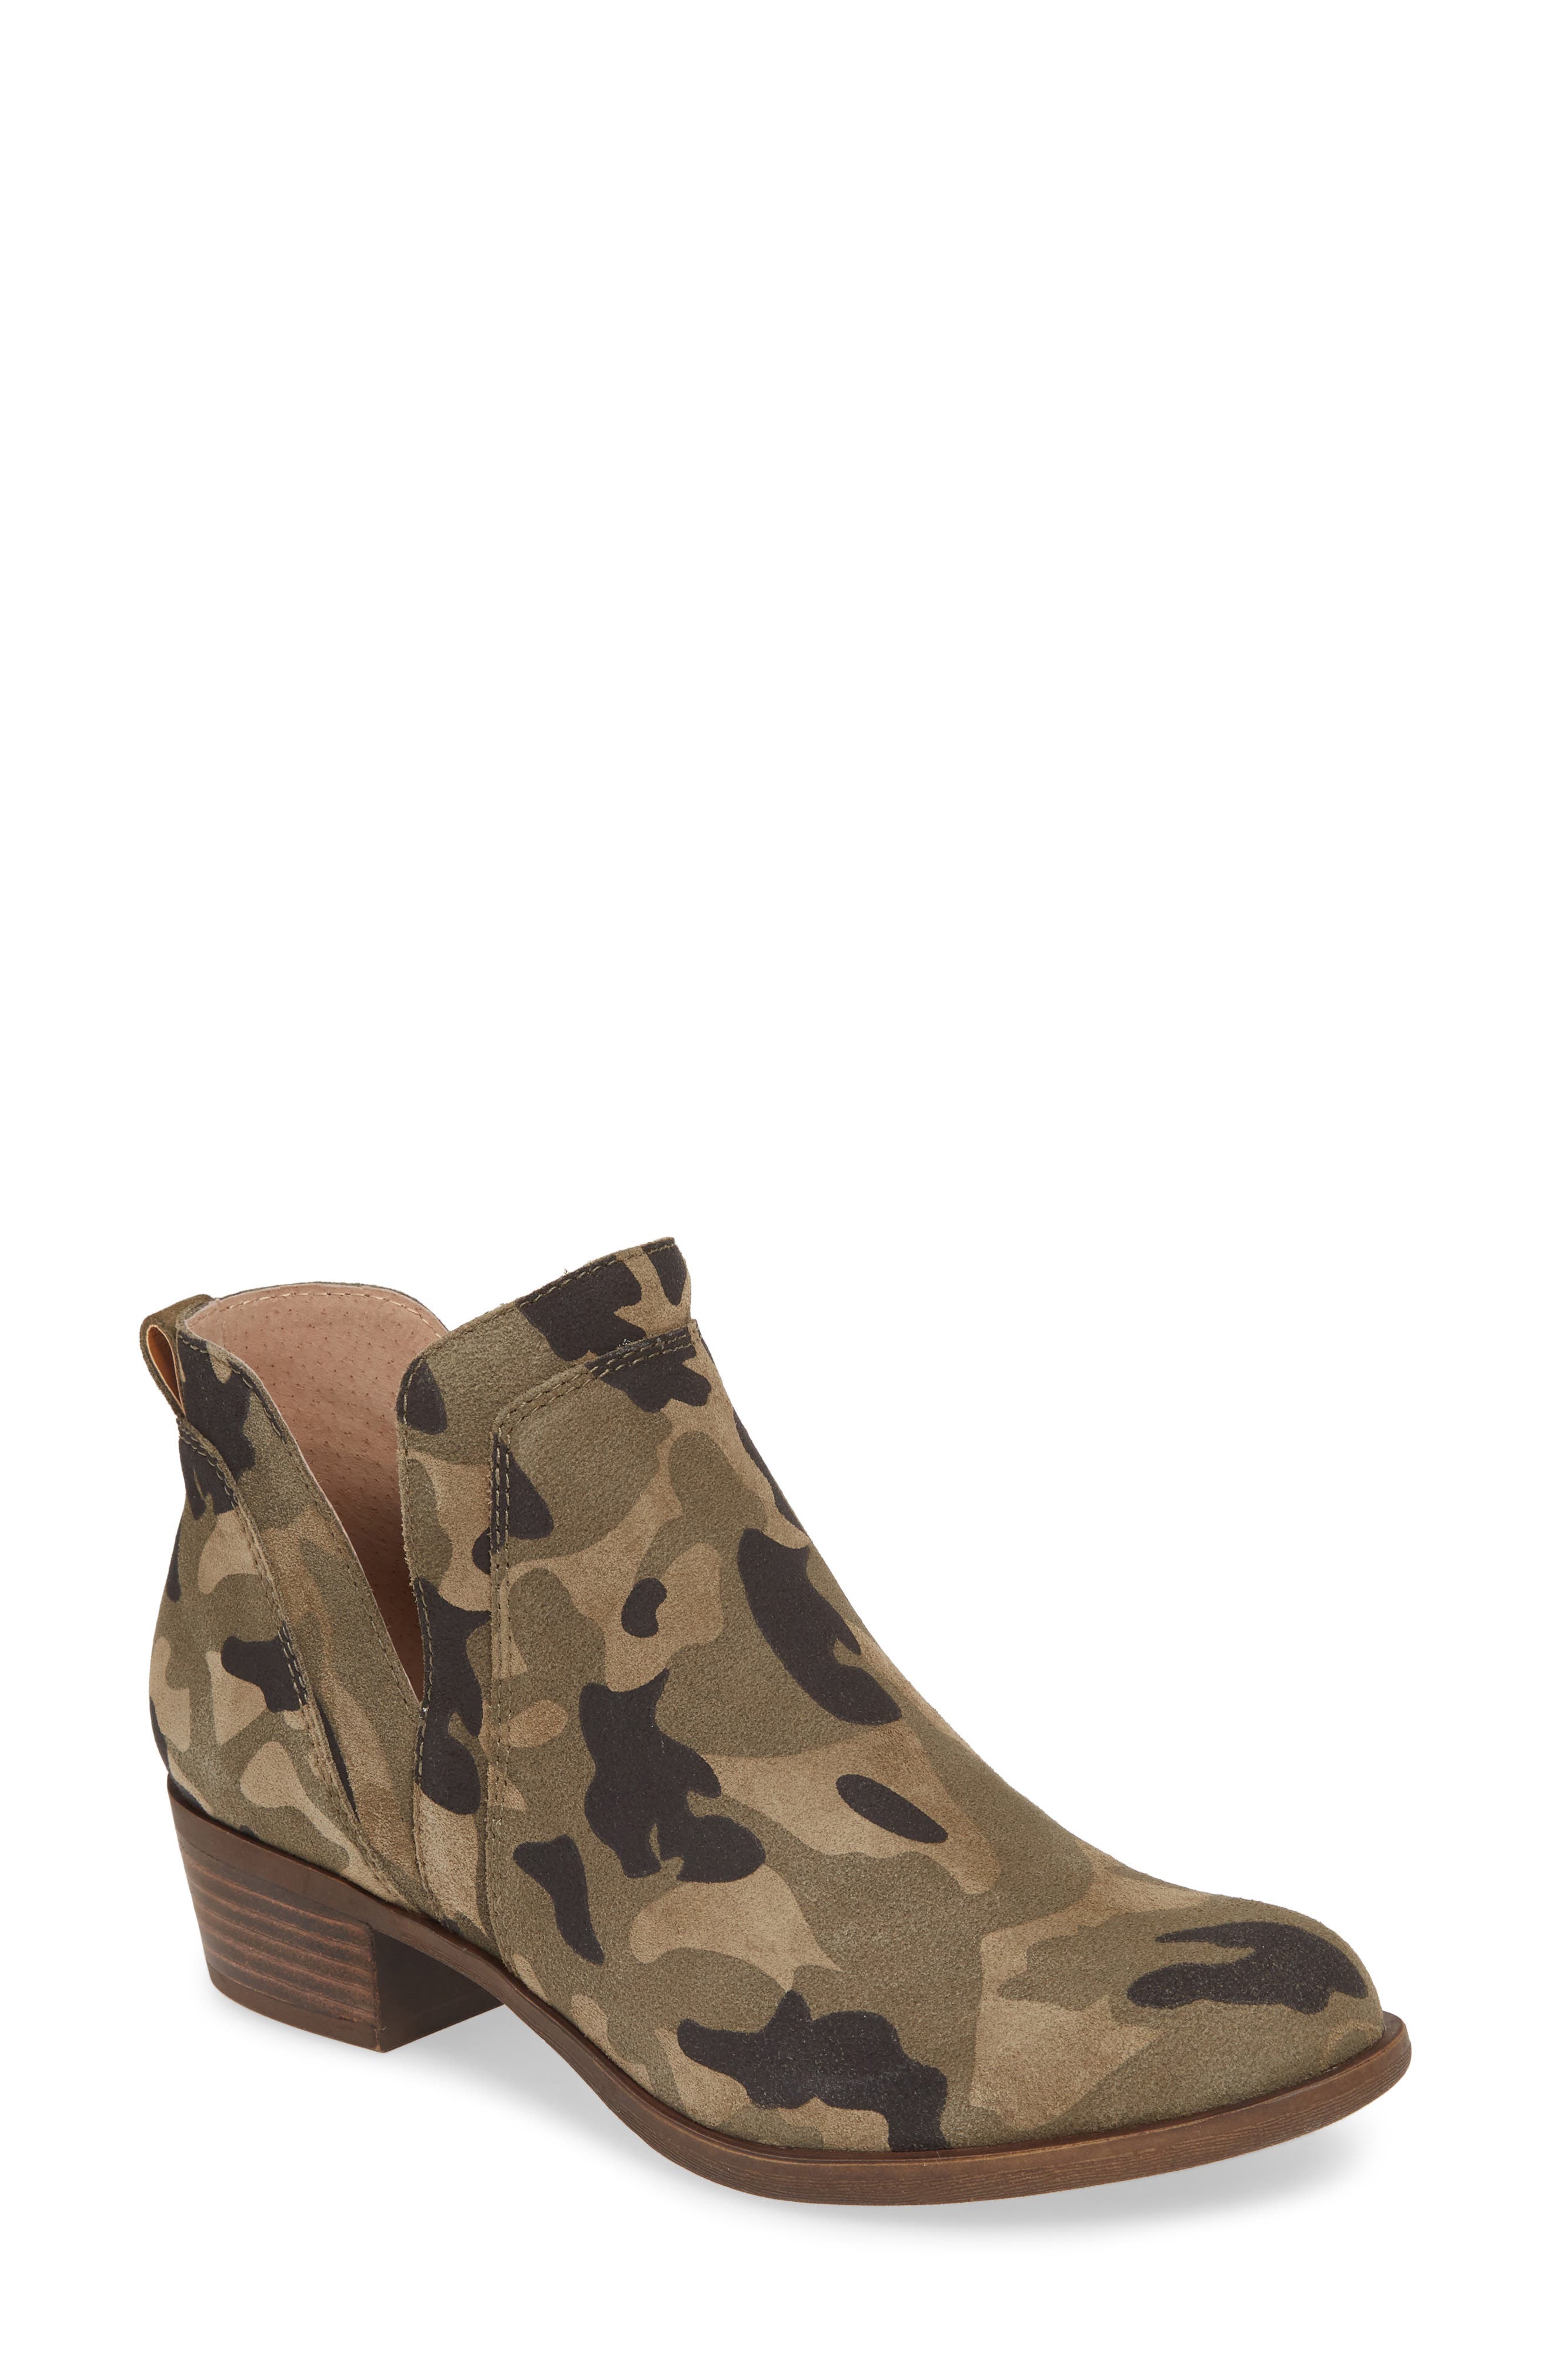 Lucky Brand Boots \u0026 Booties | Nordstrom